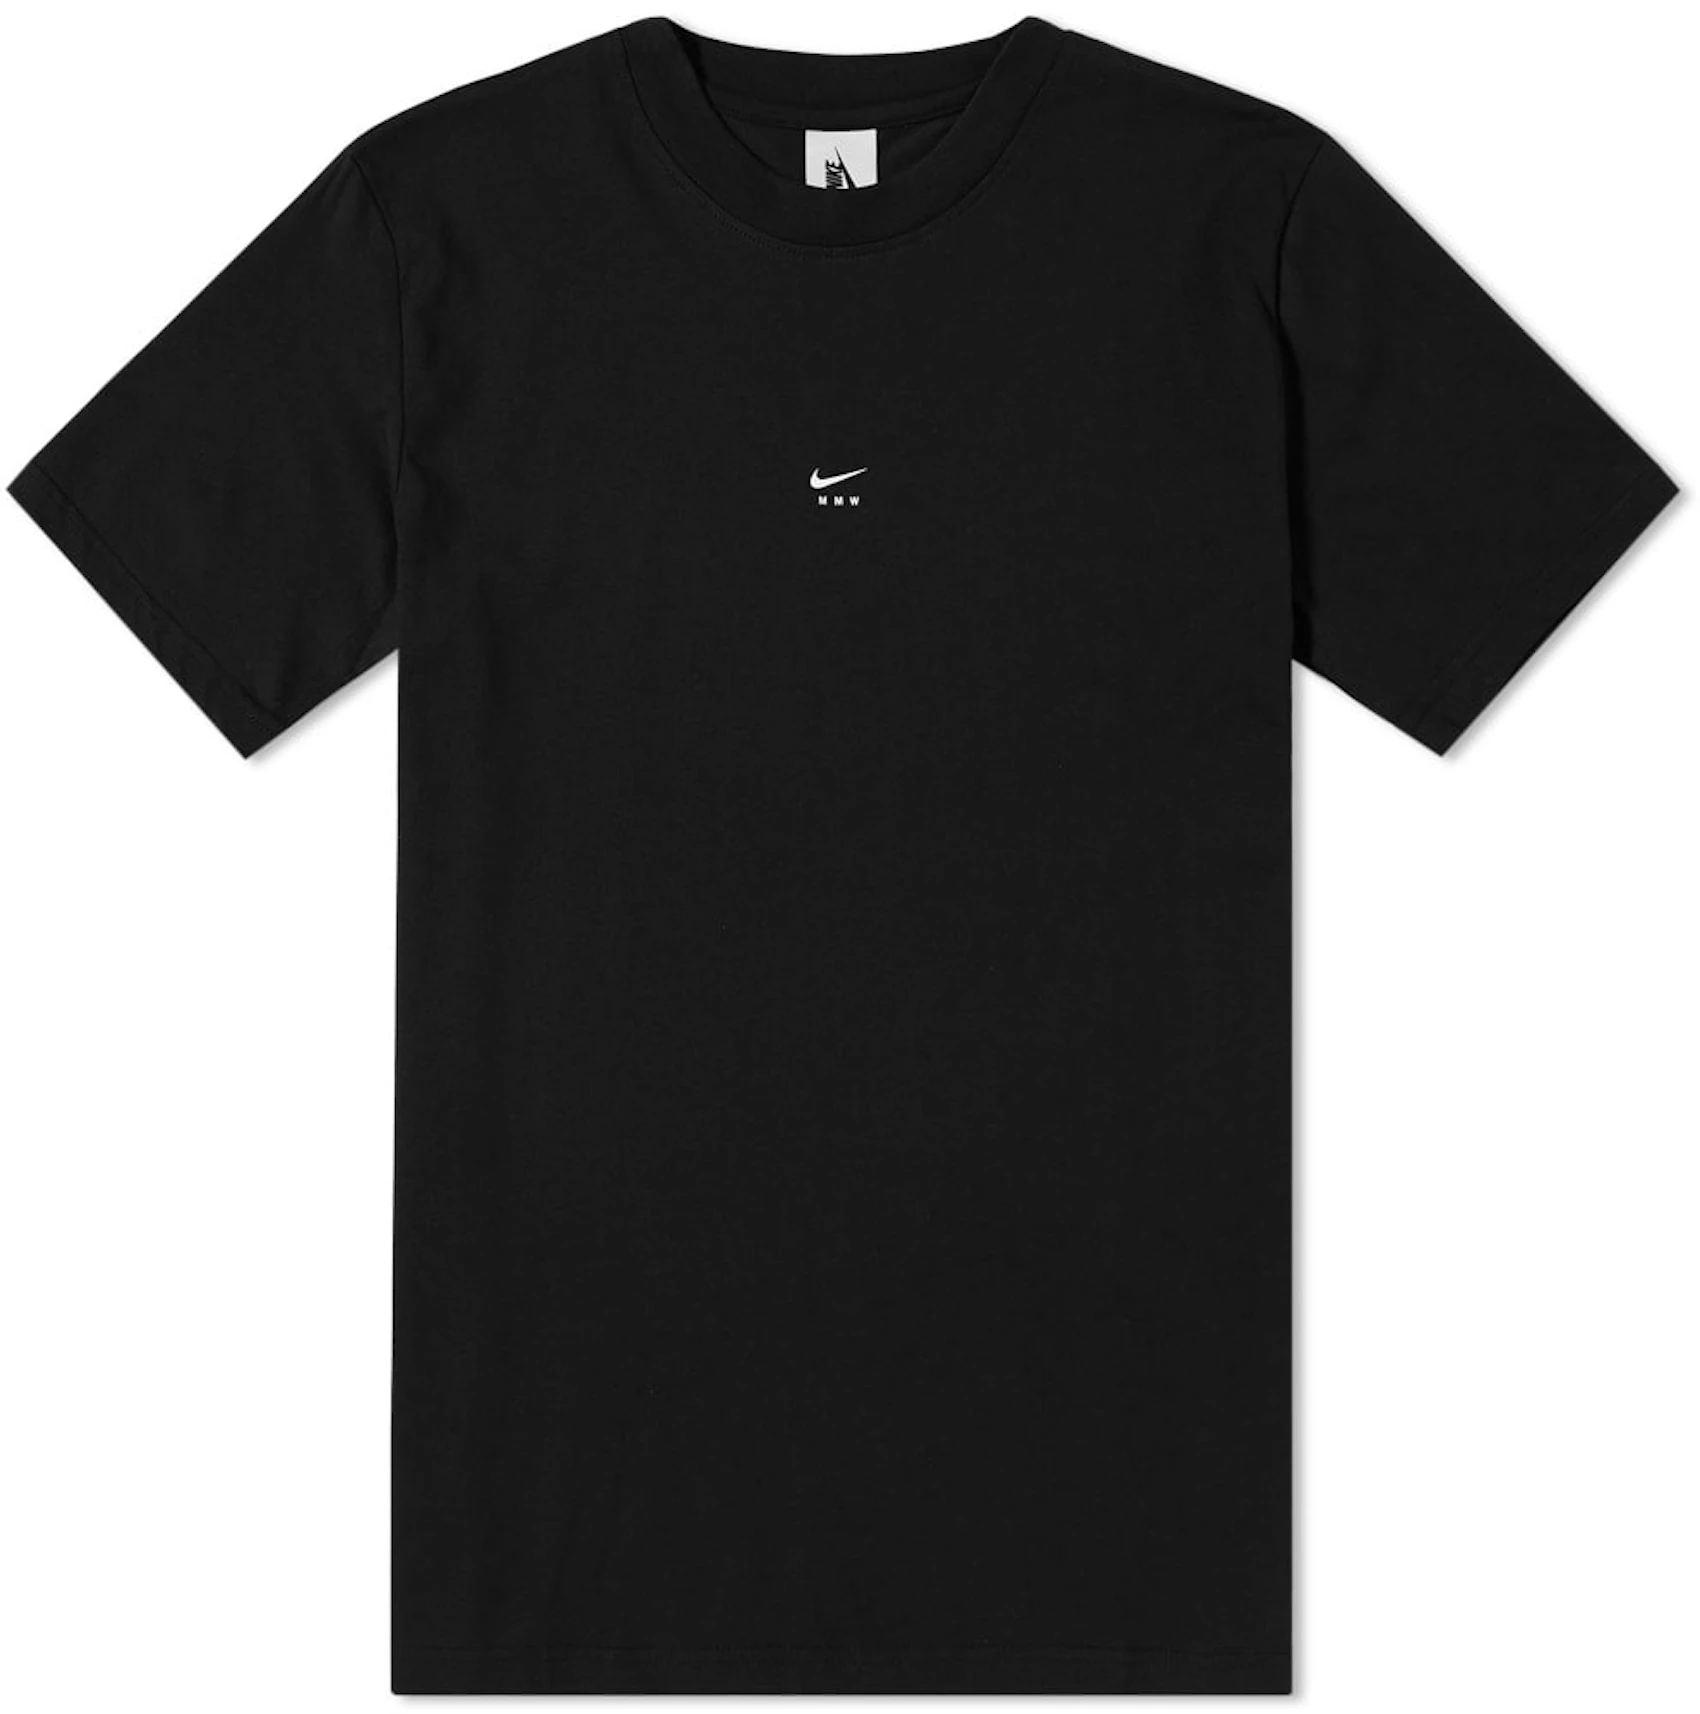 Destilar computadora Continuo Nikelab x MMW Men's Graphic T-Shirt Black - SS18 - ES